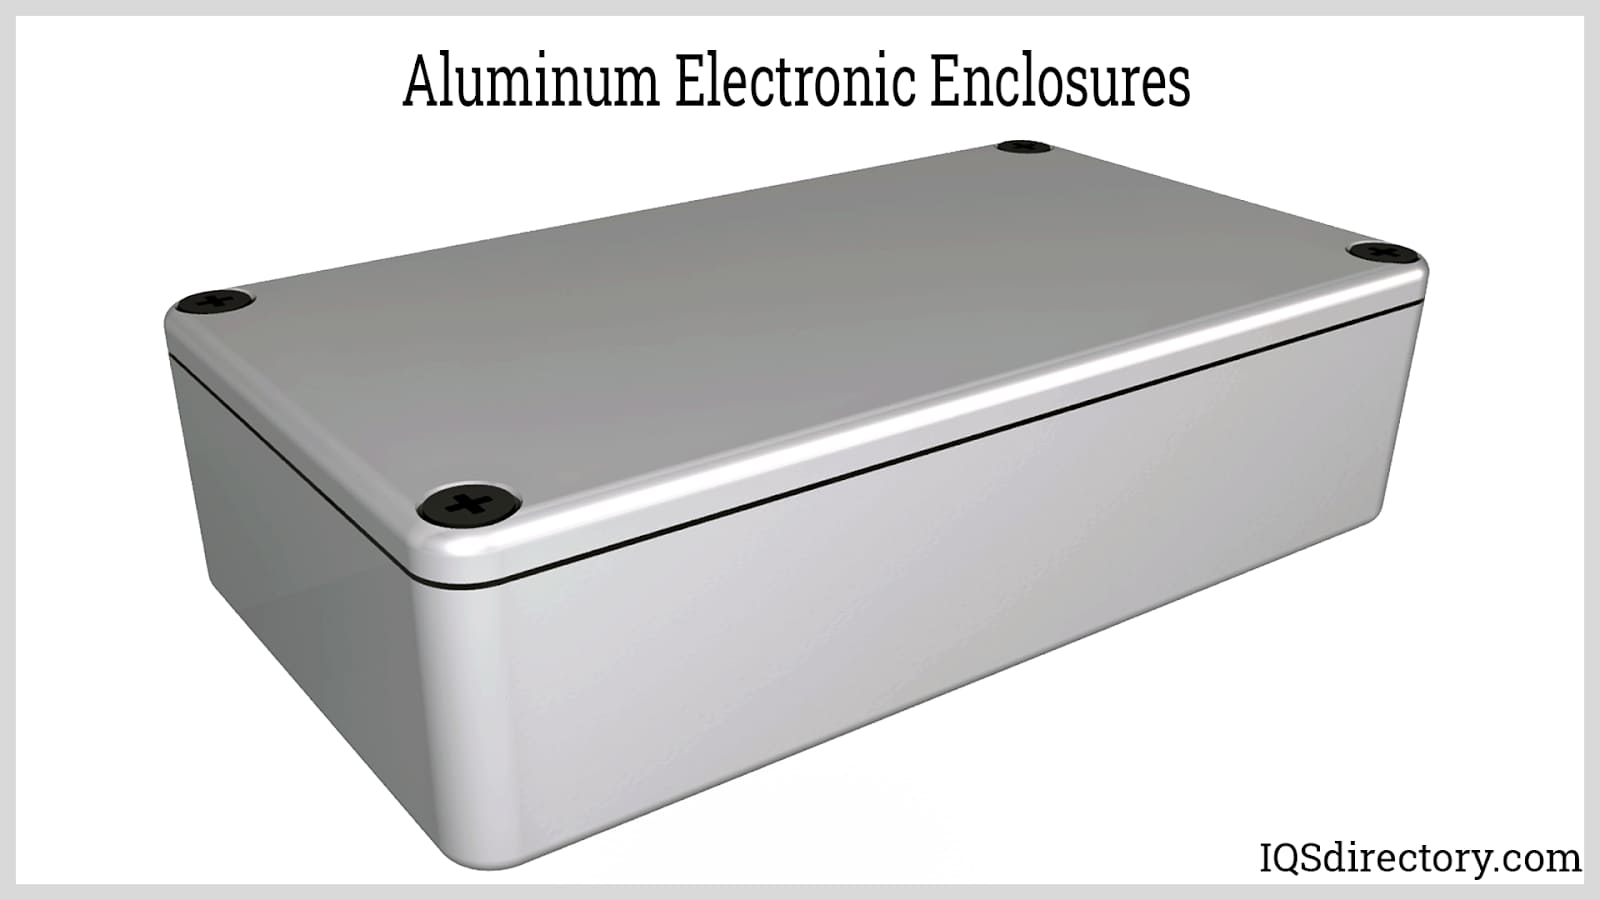 Aluminum Electronic Enclosures